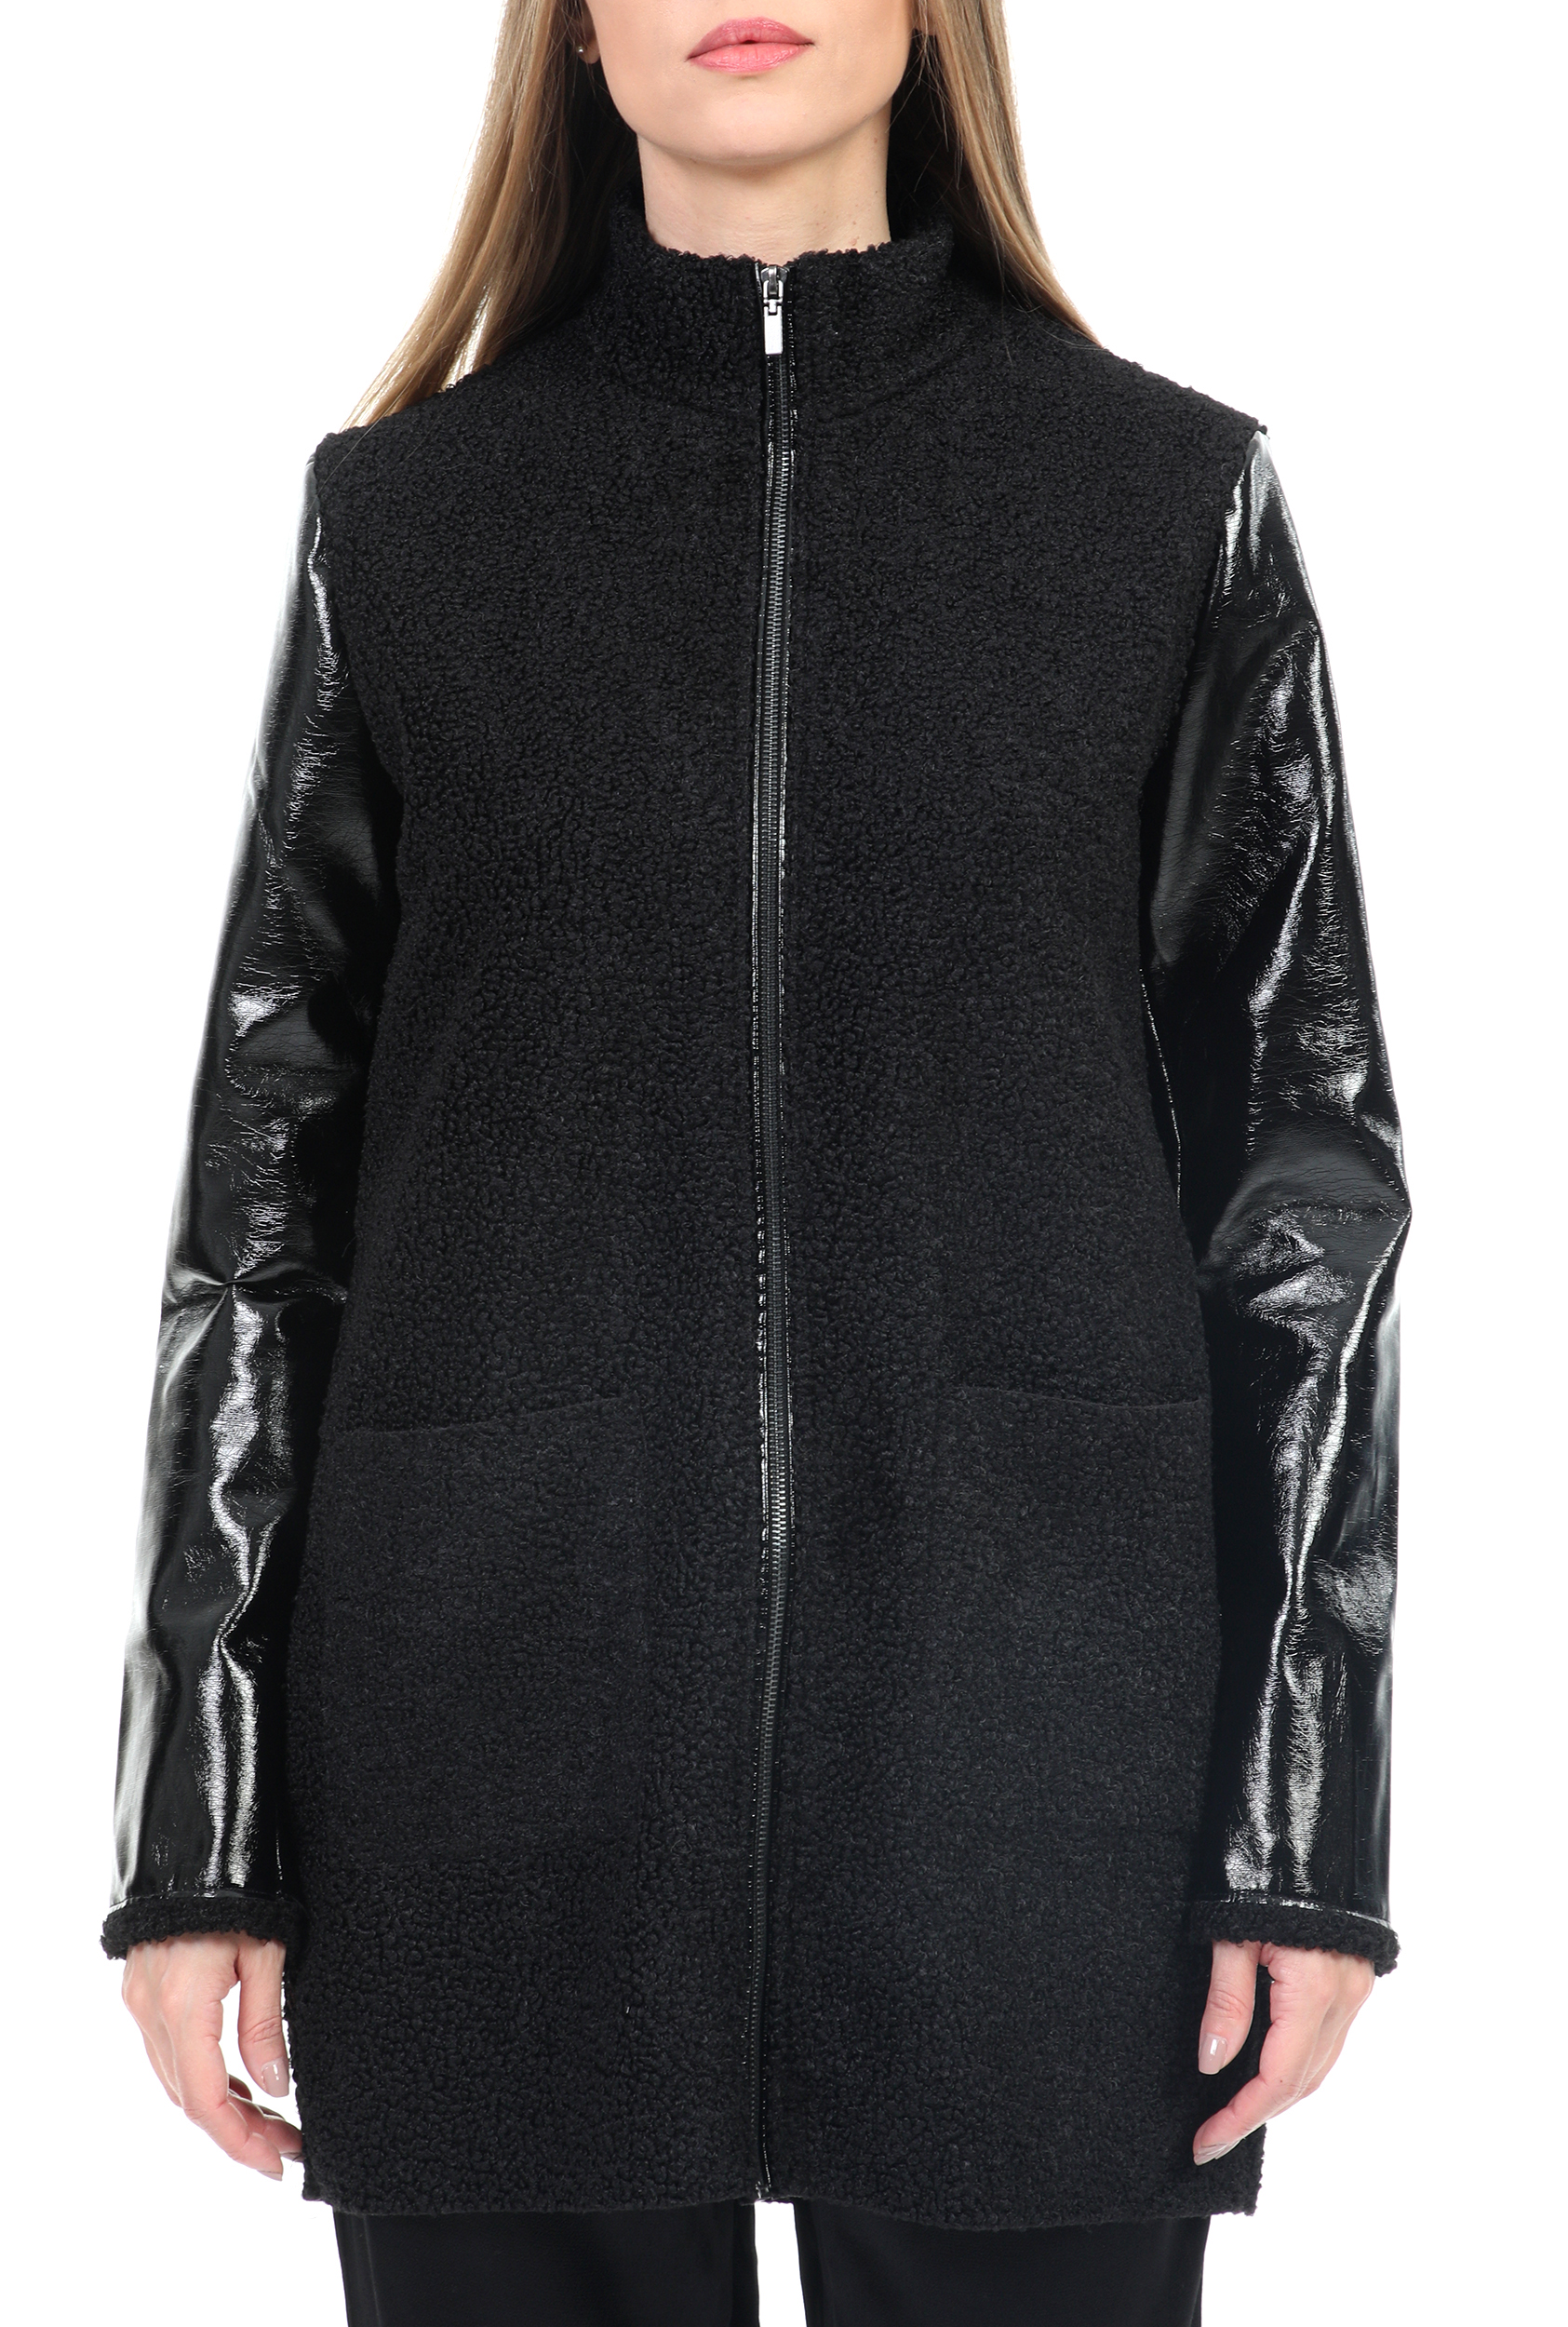 LA DOLLS – Γυναικειο jacket LA DOLLS MORITZ μαυρο